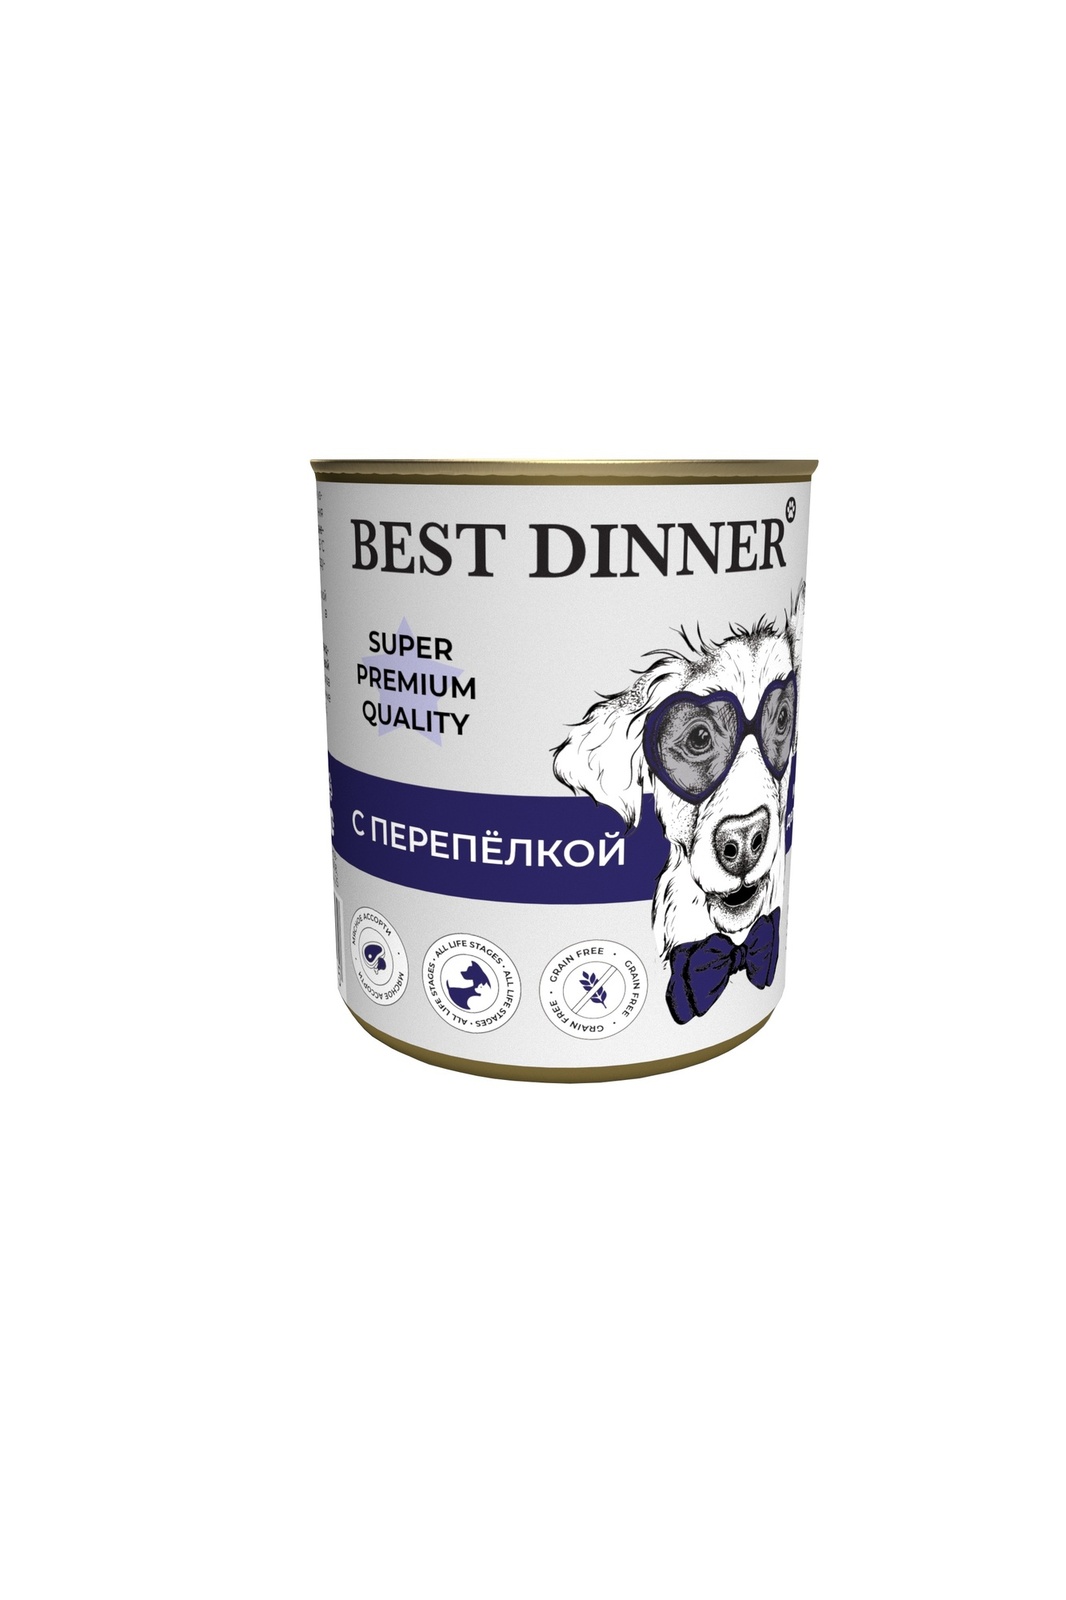 Best Dinner Best Dinner консервы для собак Super Premium С перепелкой (340 г)